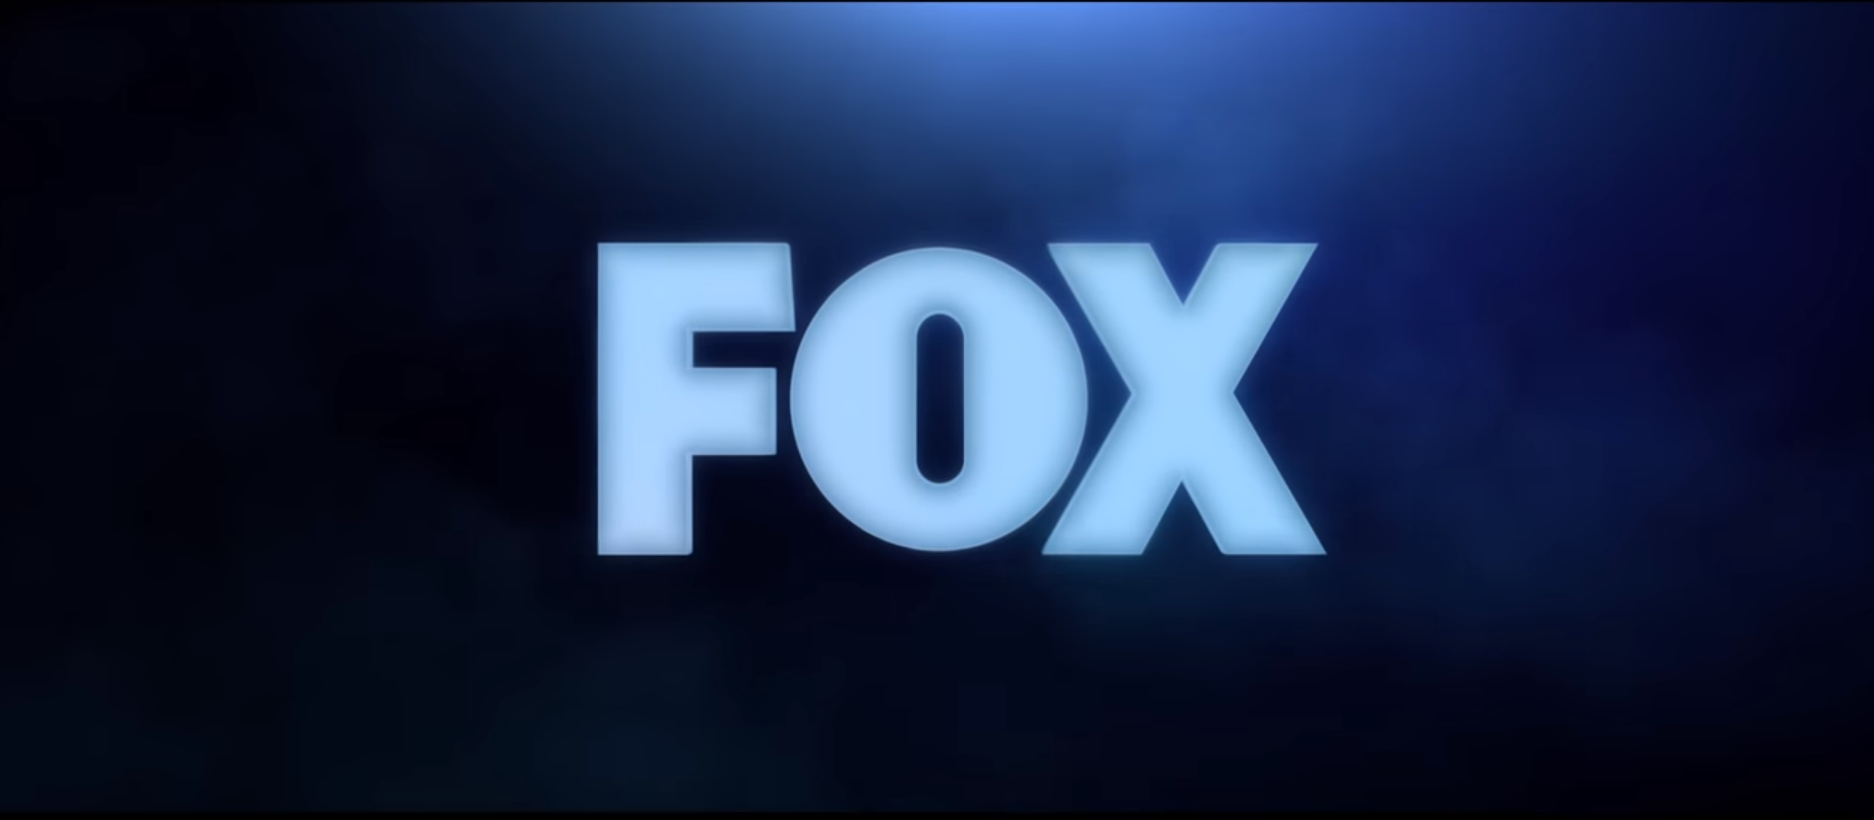 Fox TV shows. Fox Entertainment Group. Fox TV Ego.